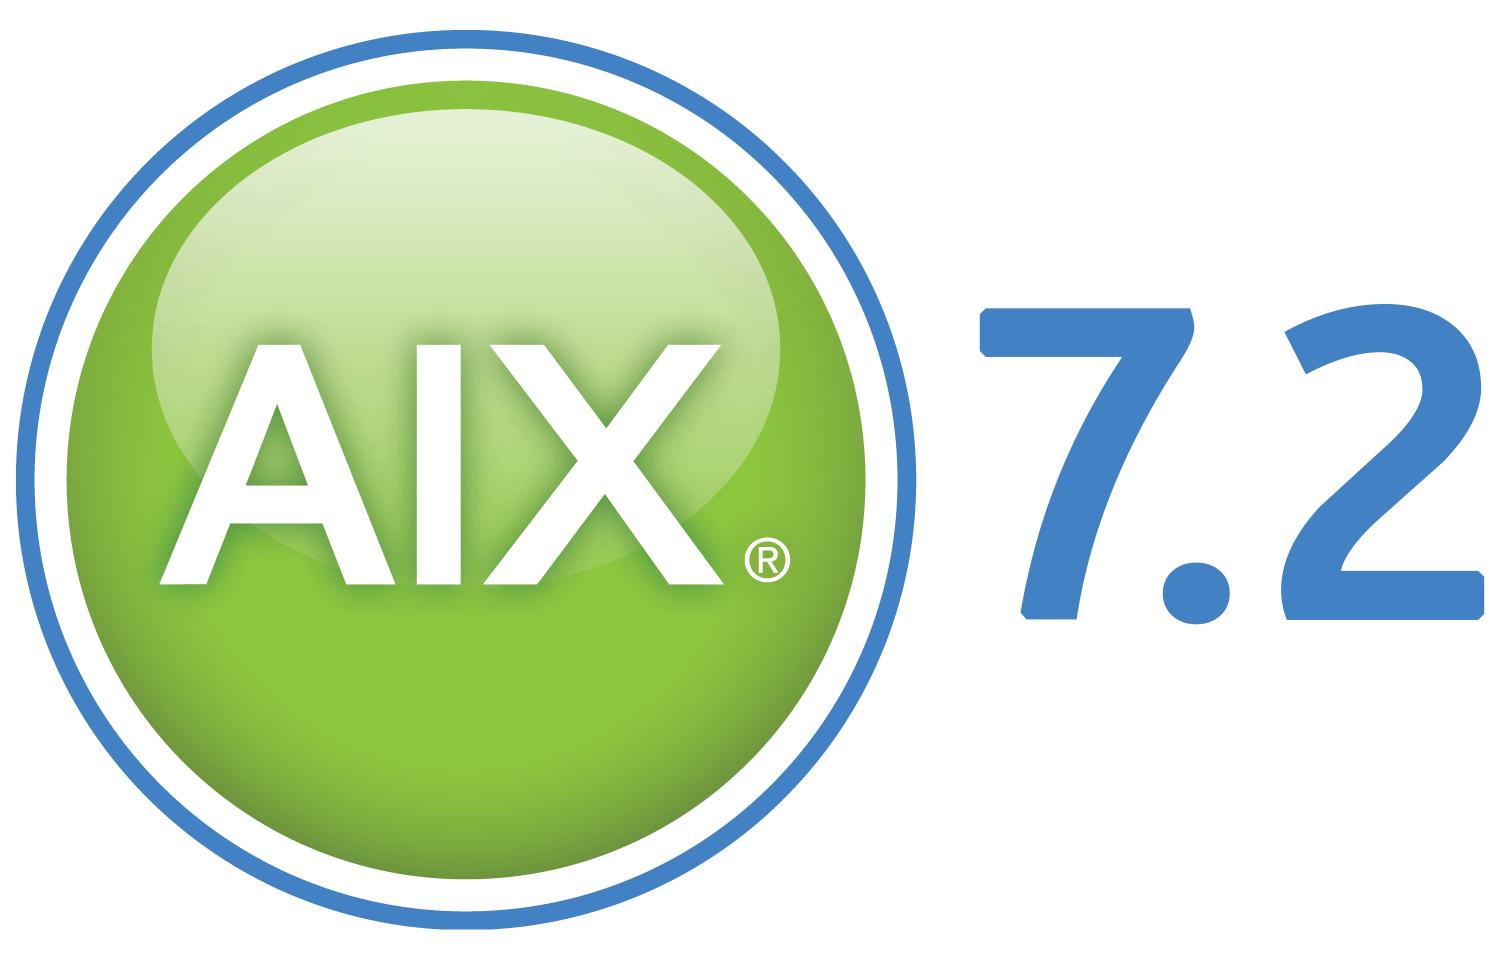 AIX Logo - AIX 7.2 and October Power software announcements. The secret